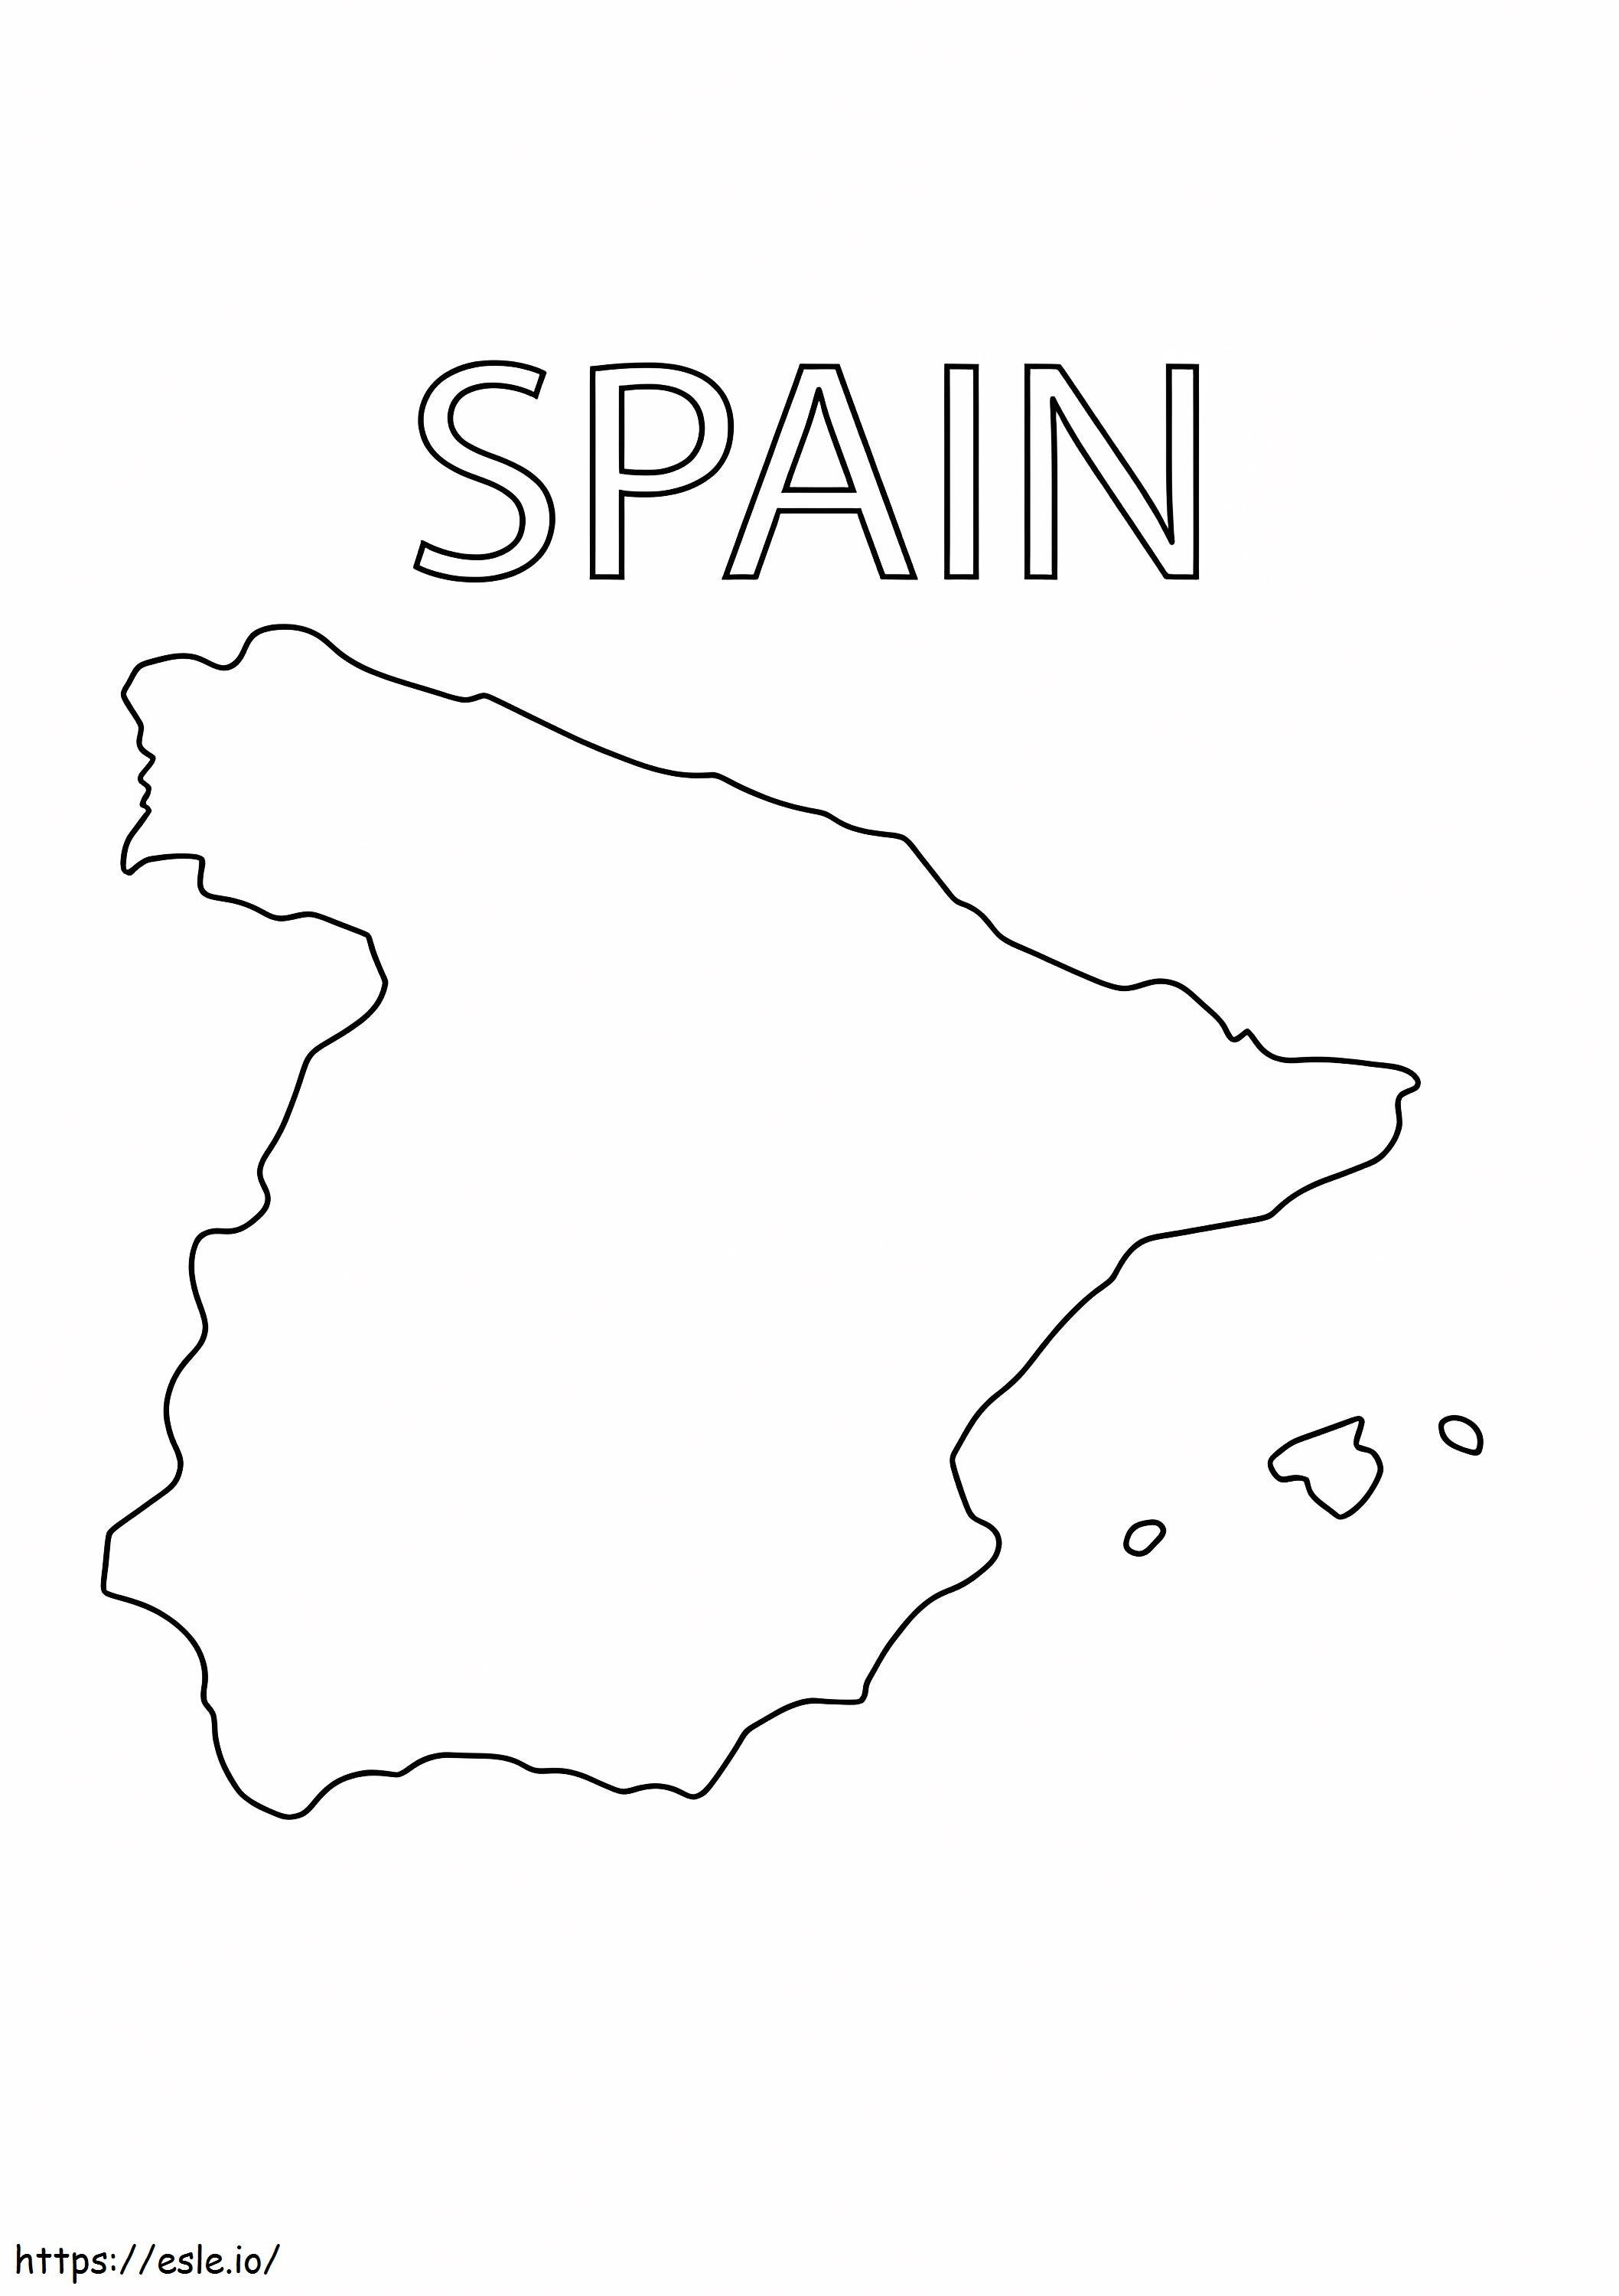 İspanya Haritası boyama